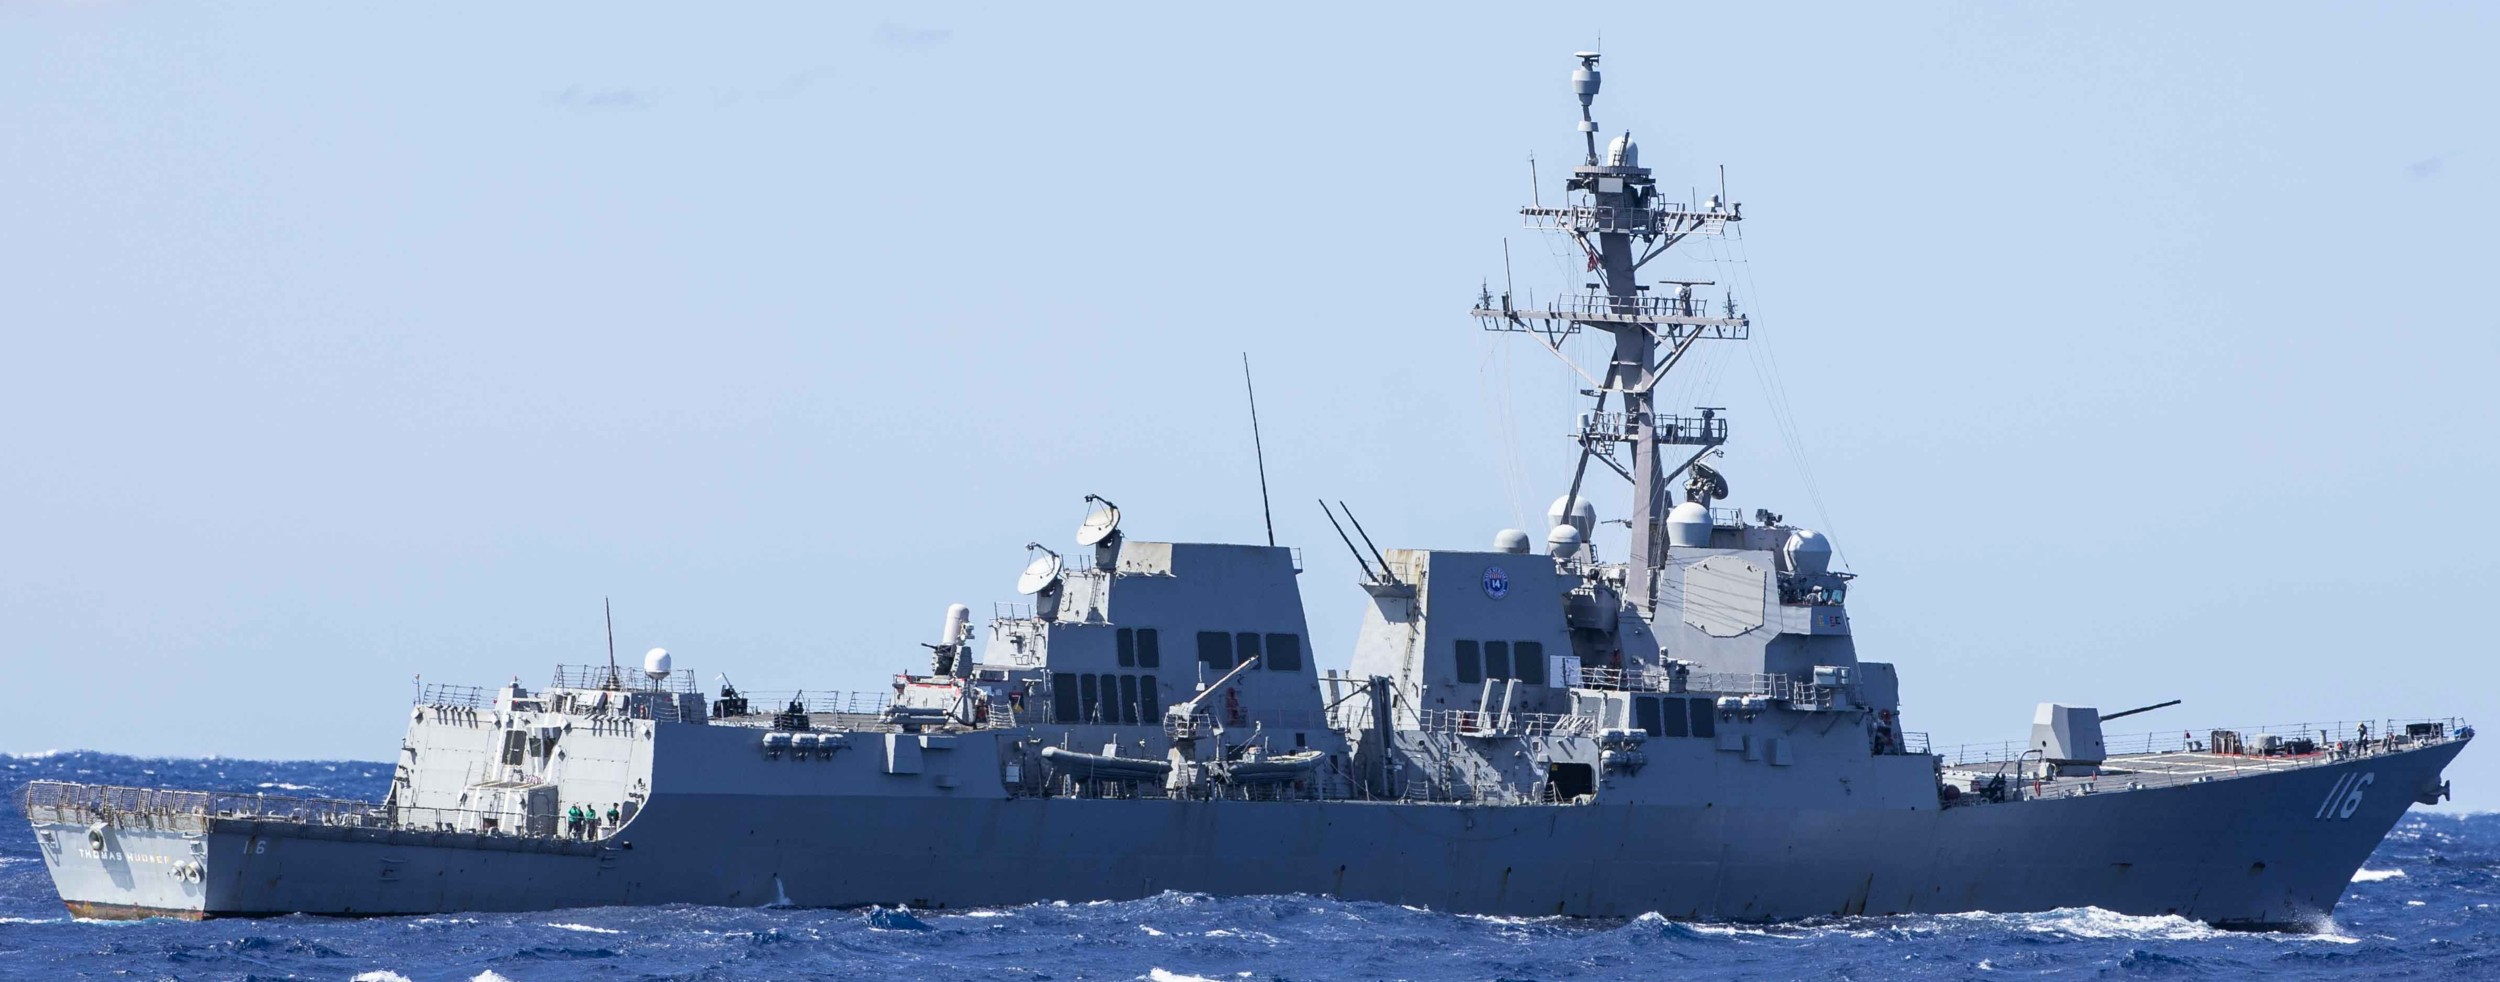 ddg-116 uss thomas hudner arleigh burke class guided missile destroyer aegis us navy 48